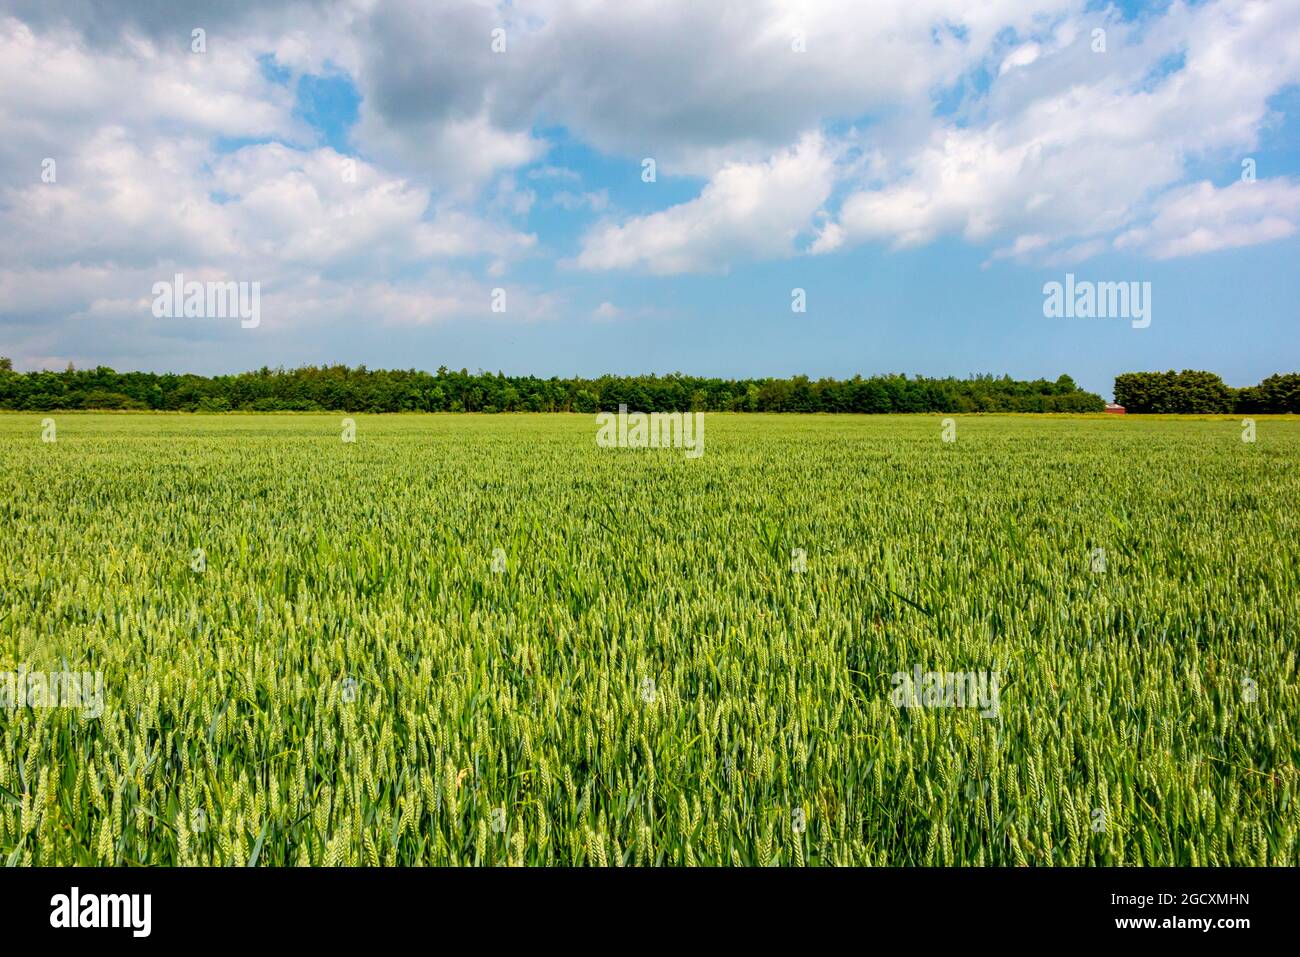 Field of barley crop growing on an arable farm. Stock Photo